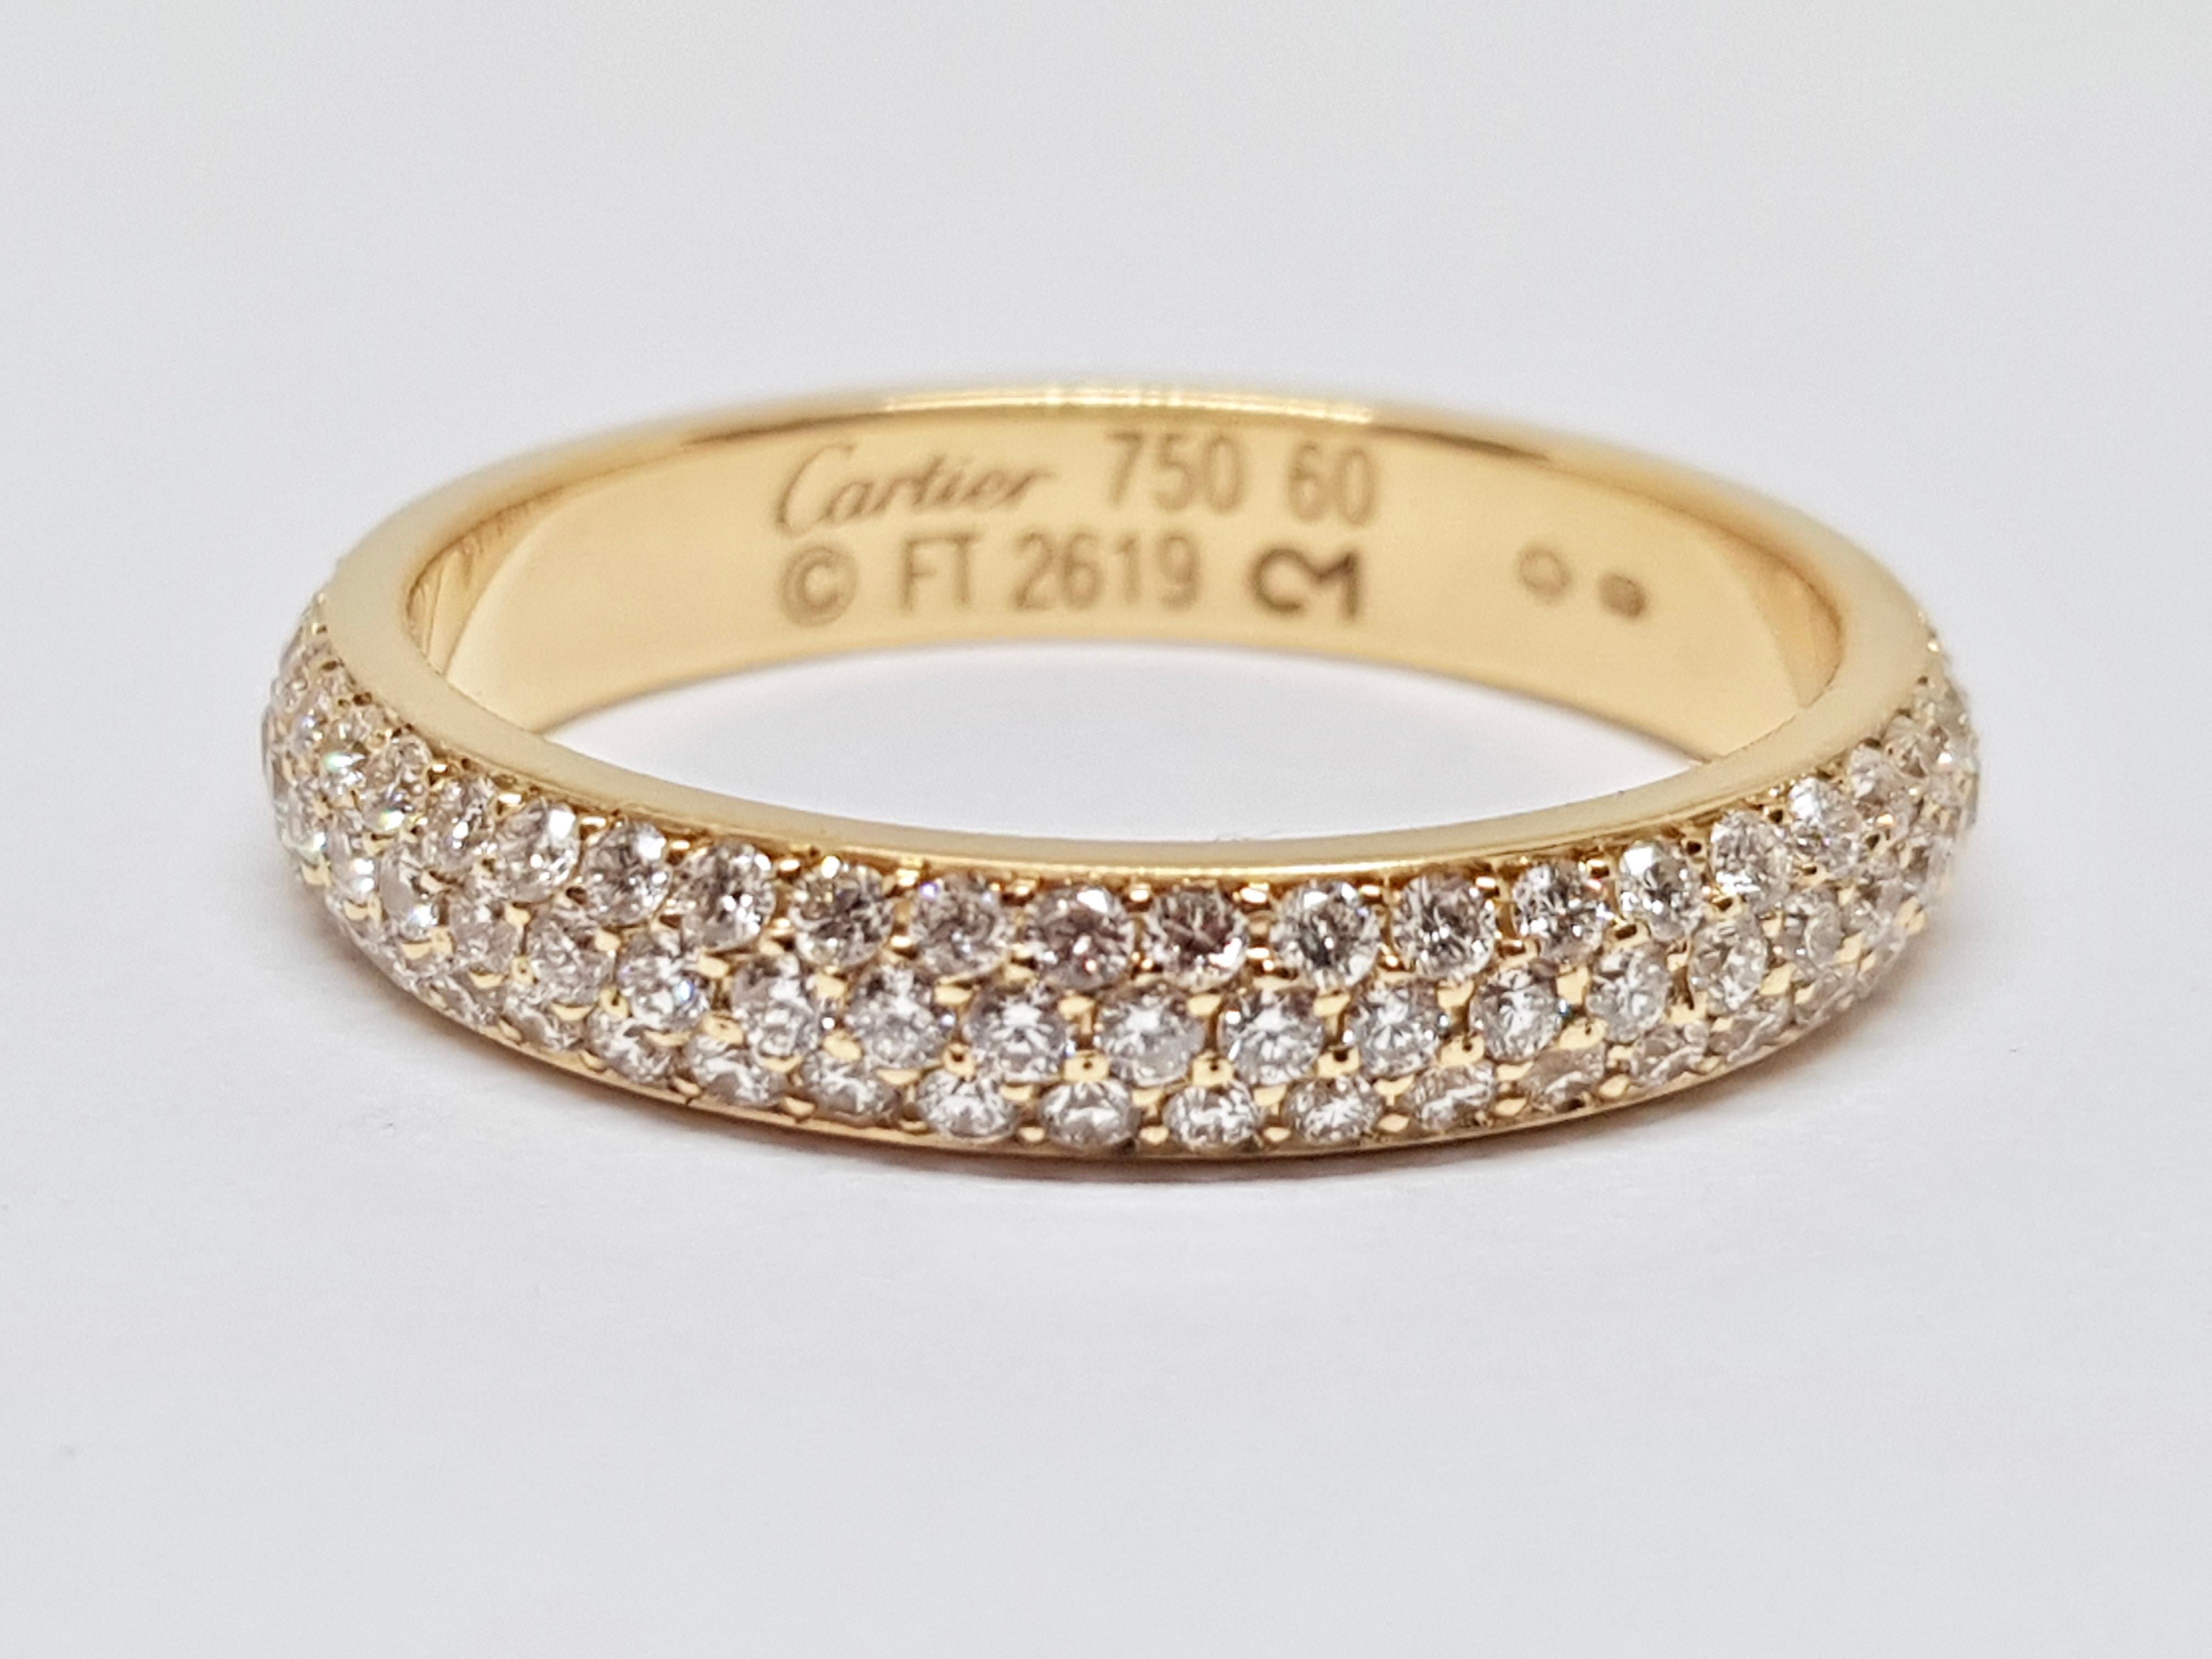 Round Cut Cartier Diamond Band Ring Yellow Gold 1.38 Carat